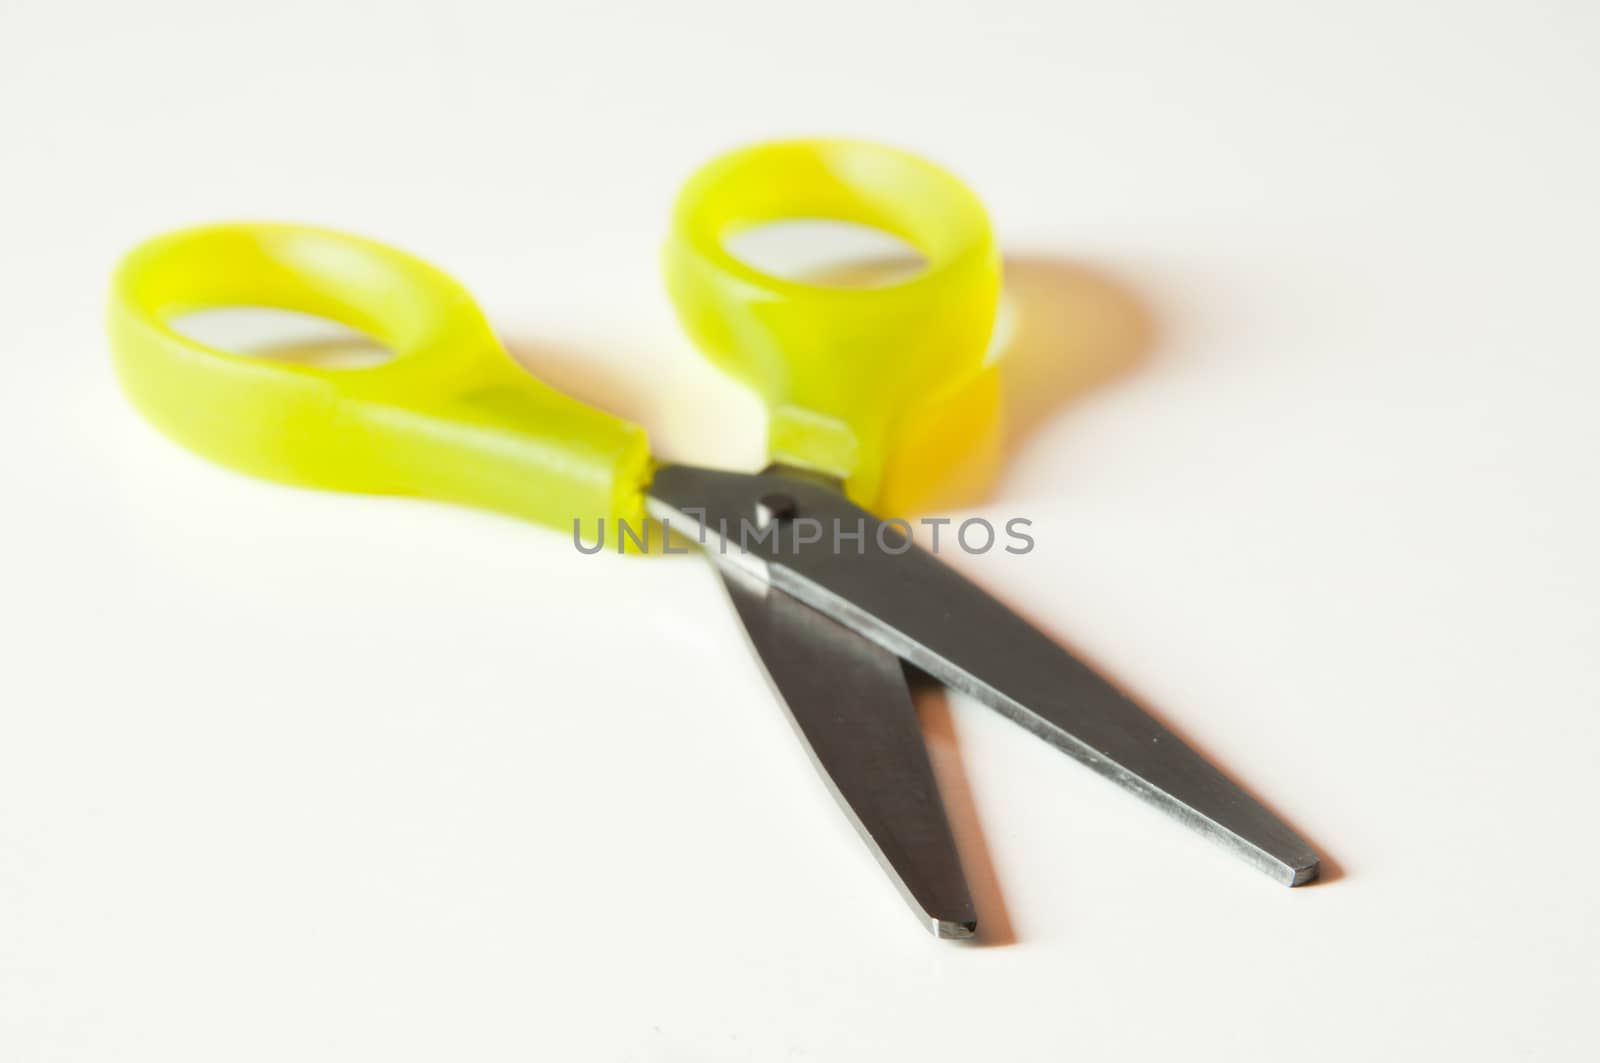 school supplies - yellow scissors closeup